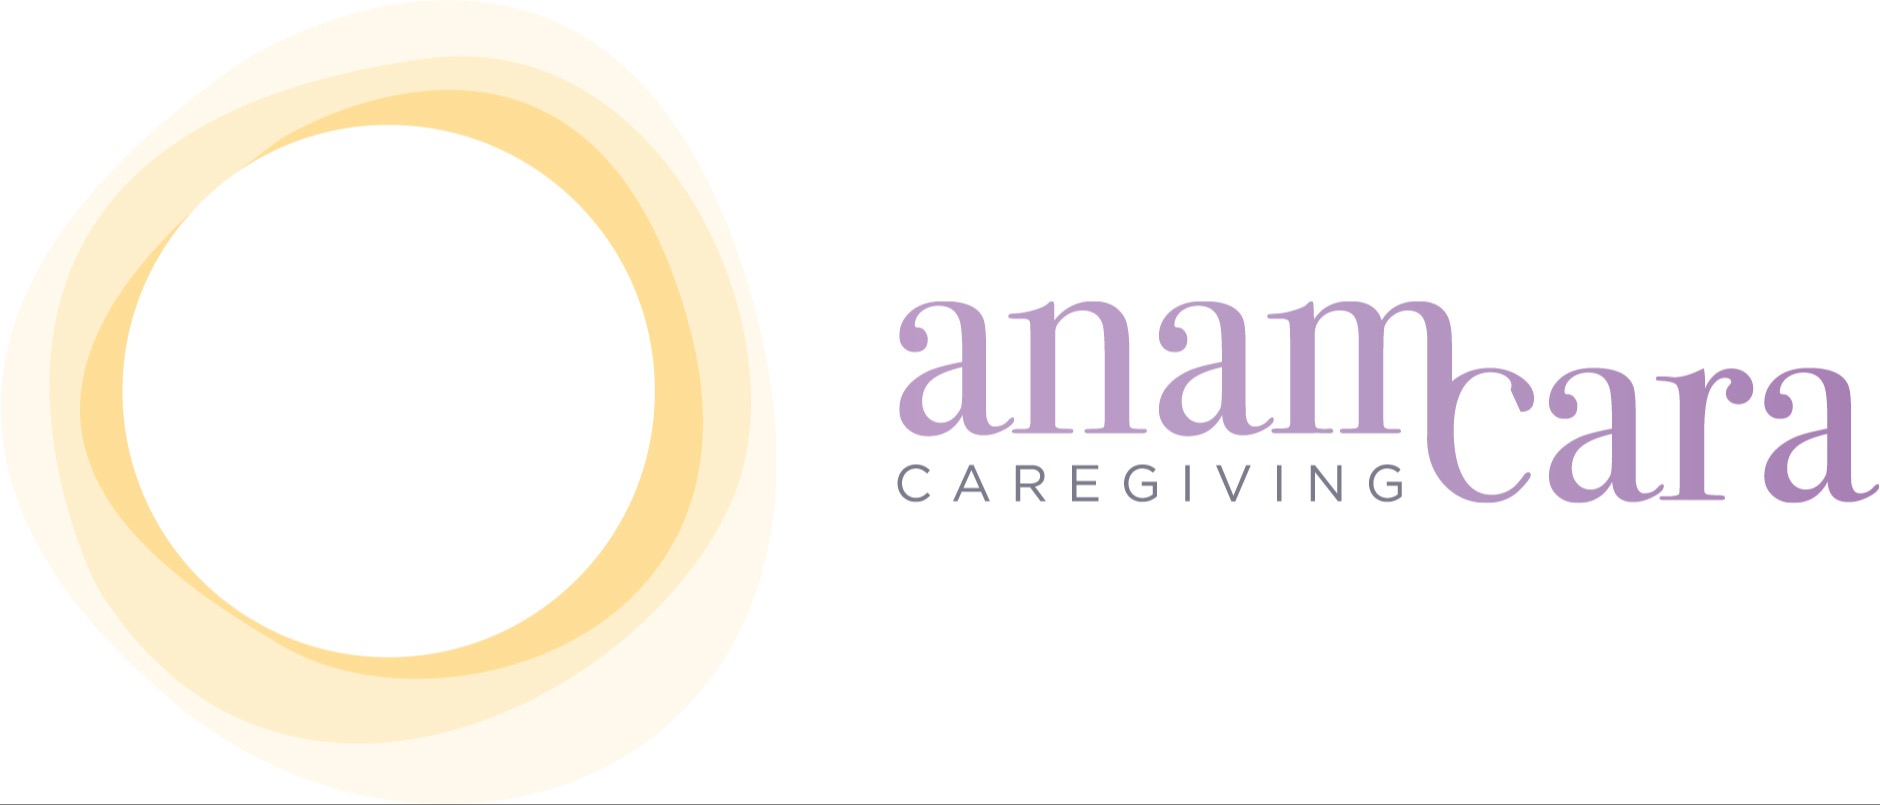 Anam Cara Giving logo